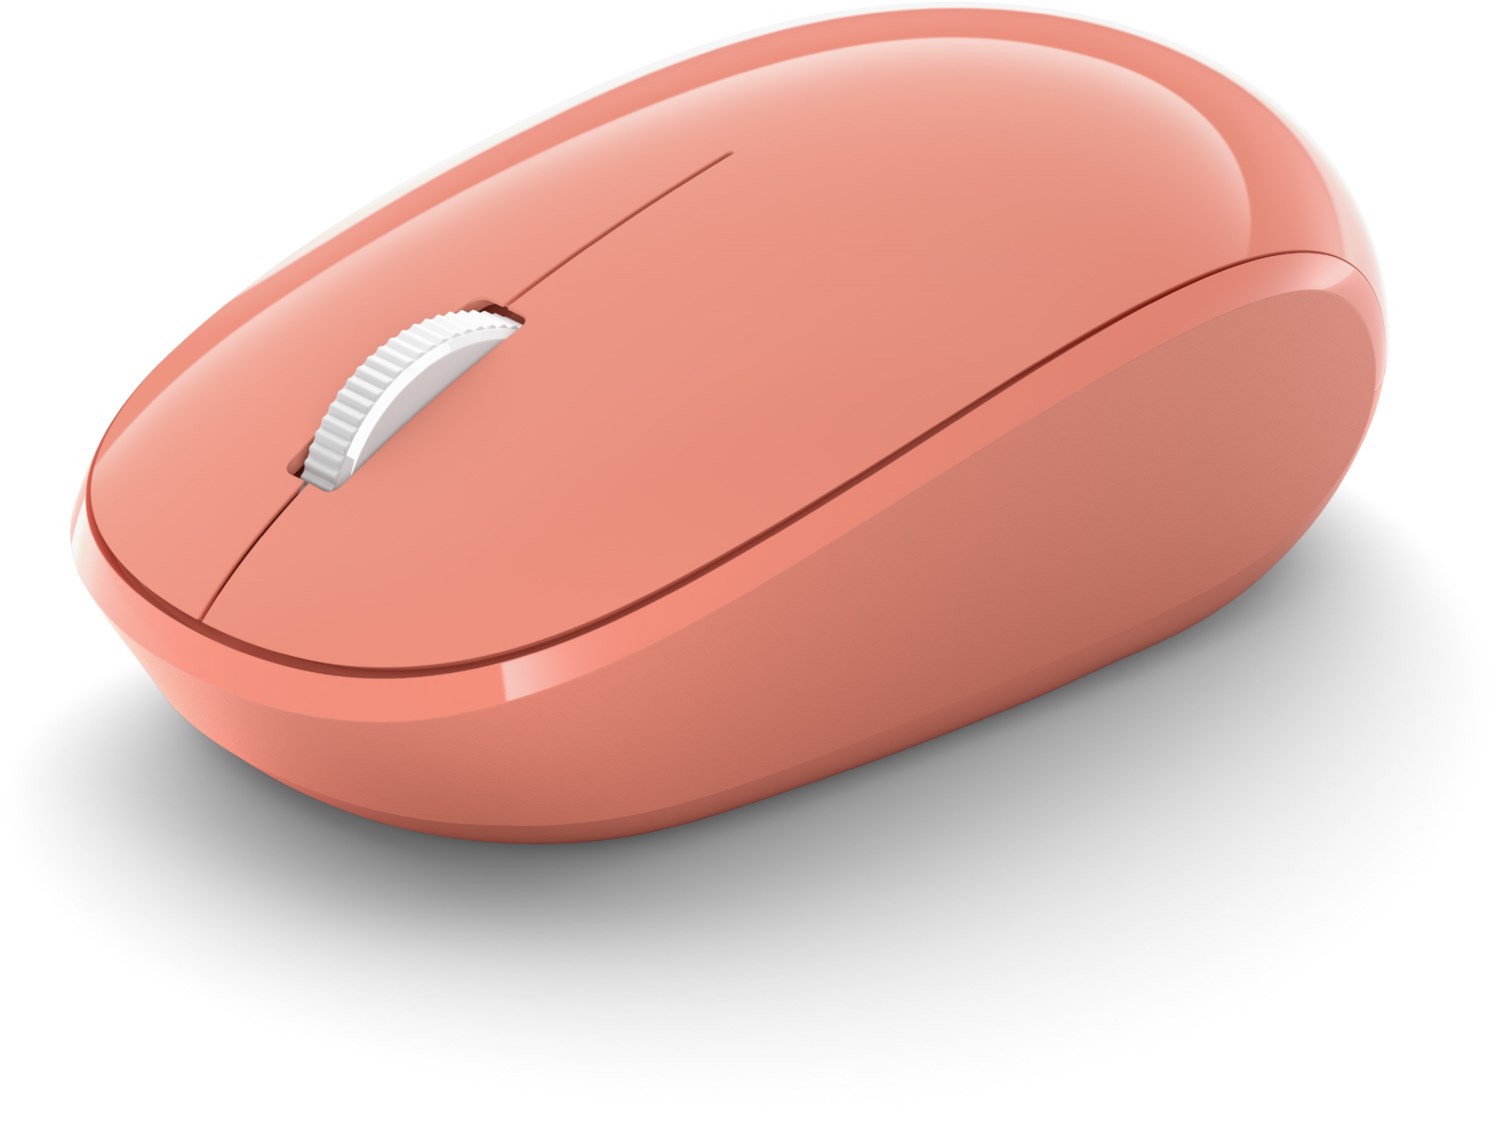 Bluetooth Mouse peach